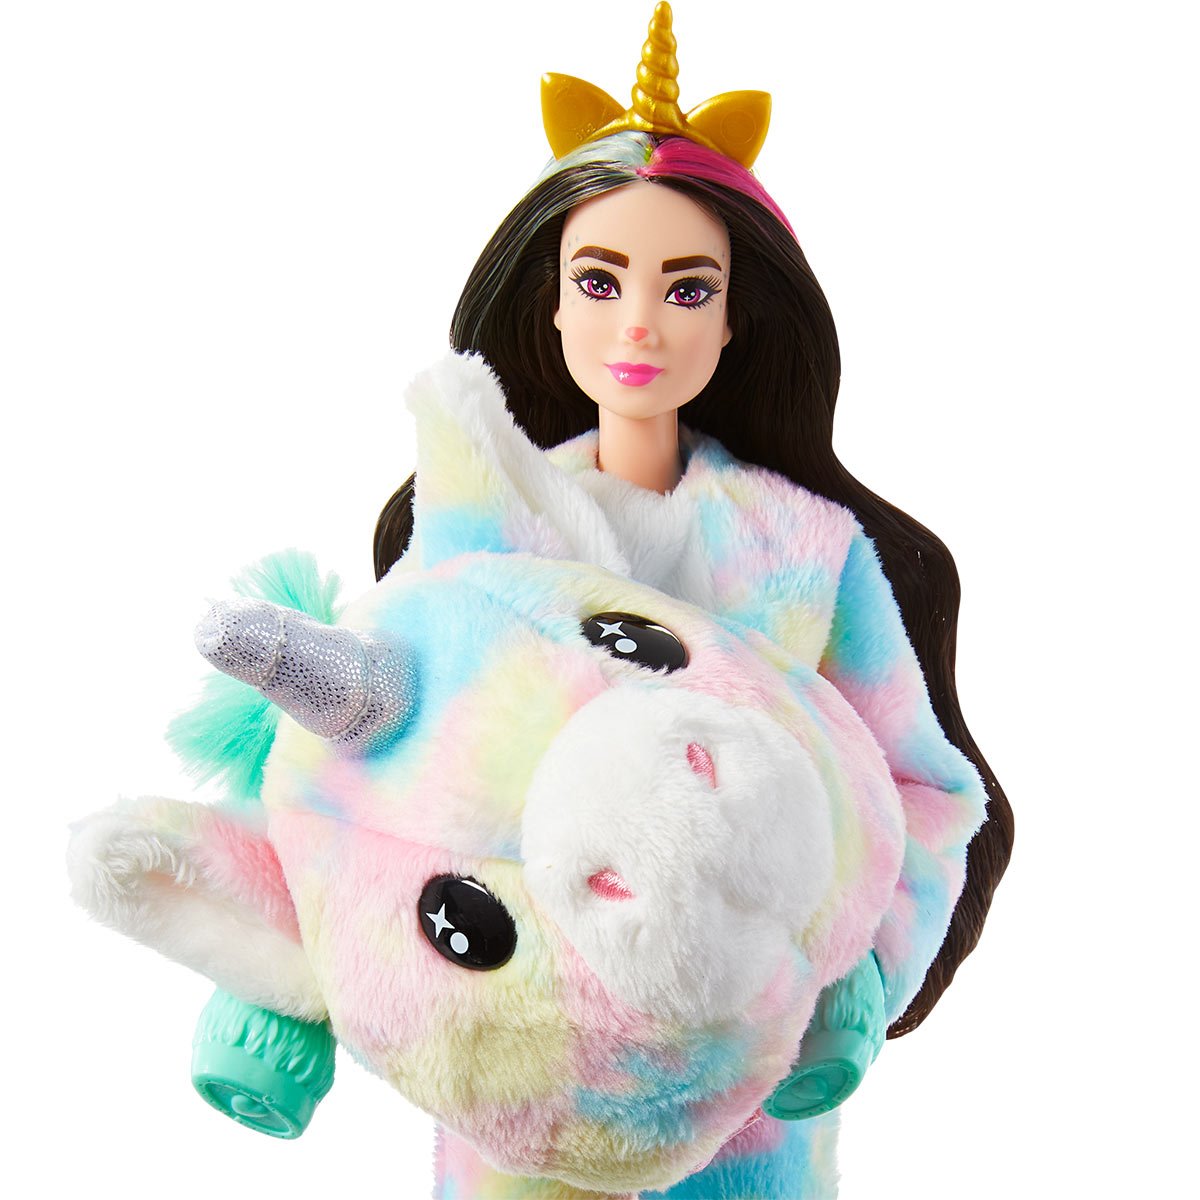 Barbie Cutie Reveal Doll - Unicorn 